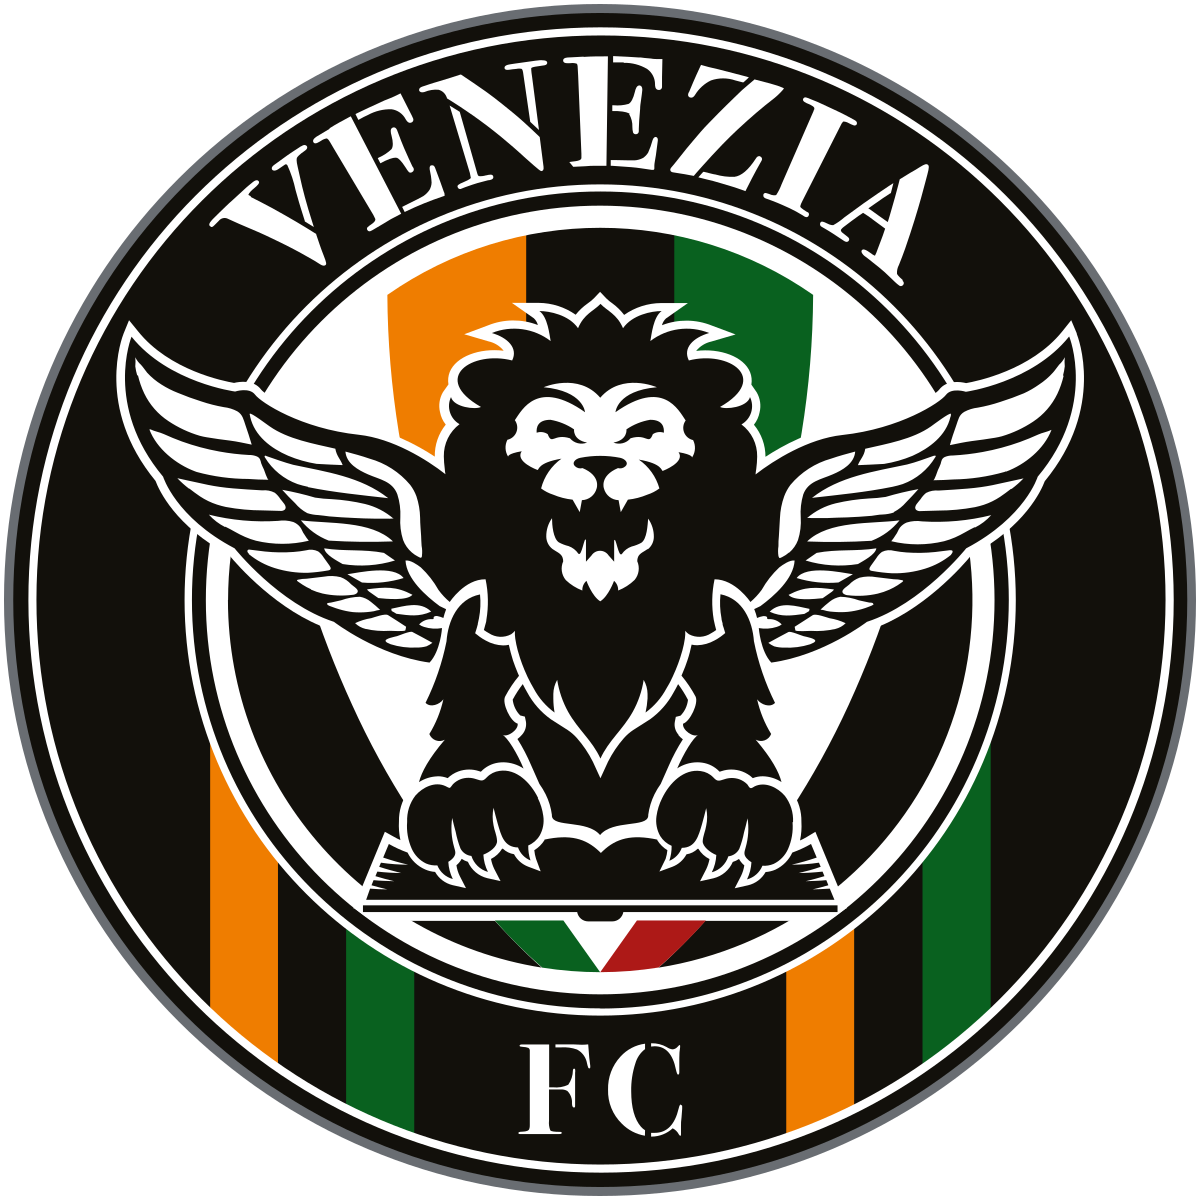 FC Venedig – Wikipedia